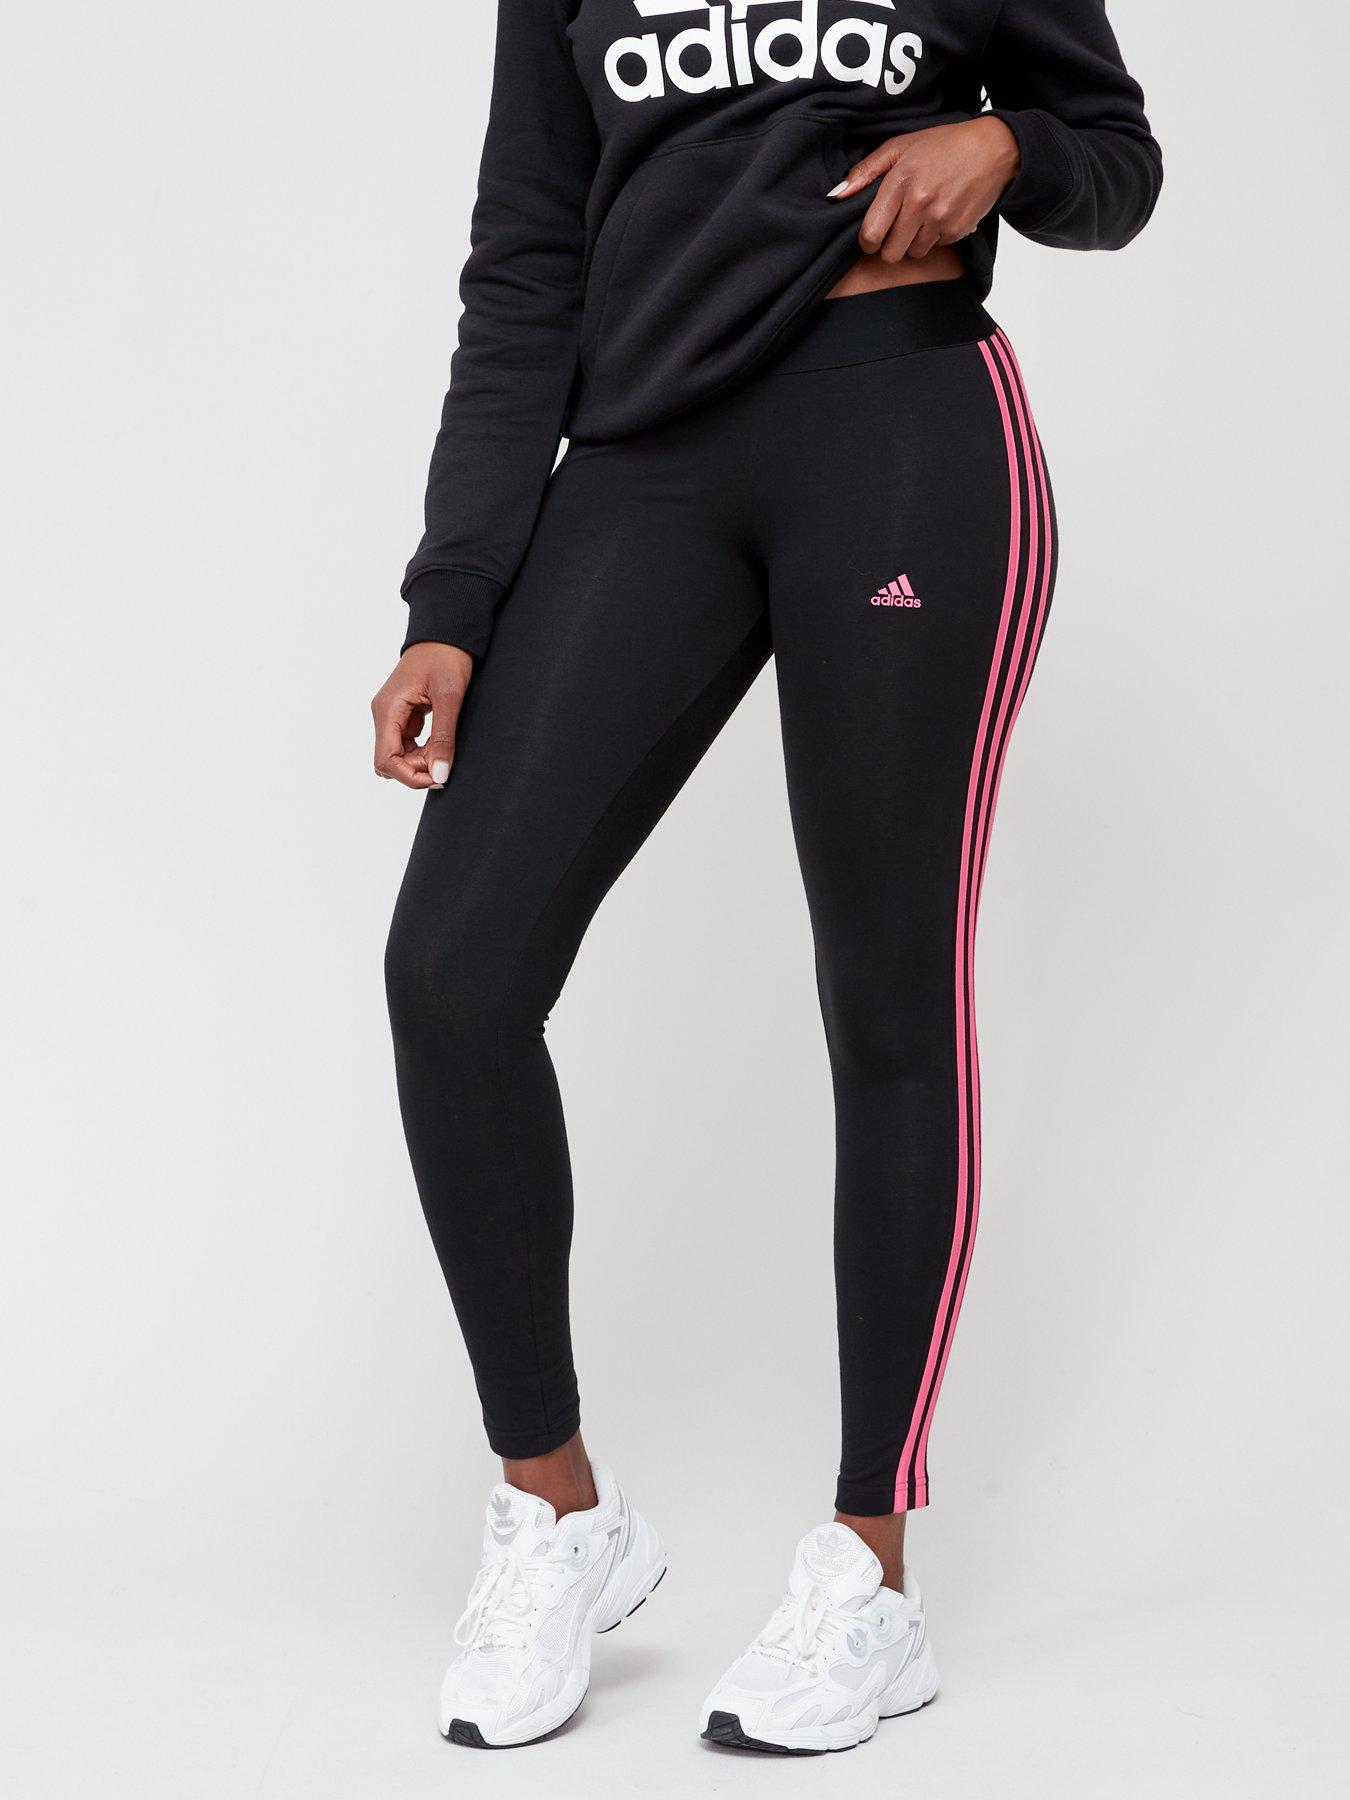 Adidas Women's Teal with Pink Logo Capri Climalite Leggings